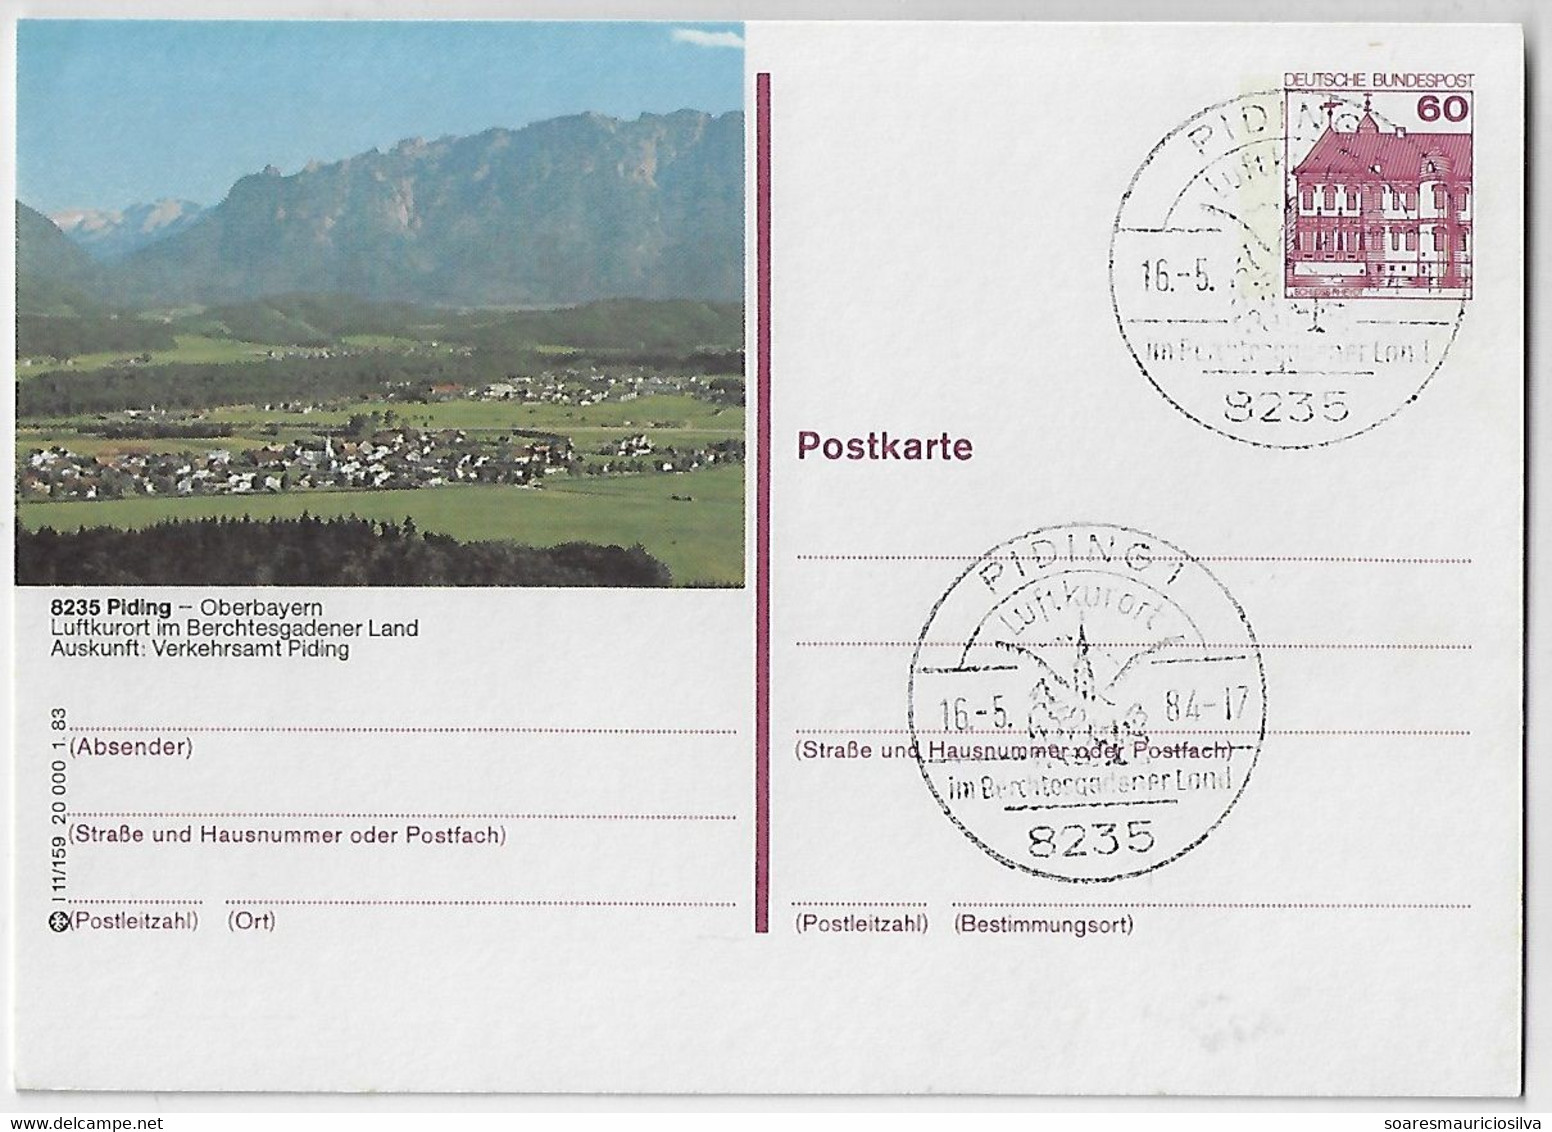 Germany 1984 Postal Stationery Card Stamp Castle Rheydt 60 Pfennig Piging Panorama Upper Bavaria Alps Mountain Range - Private Postcards - Used